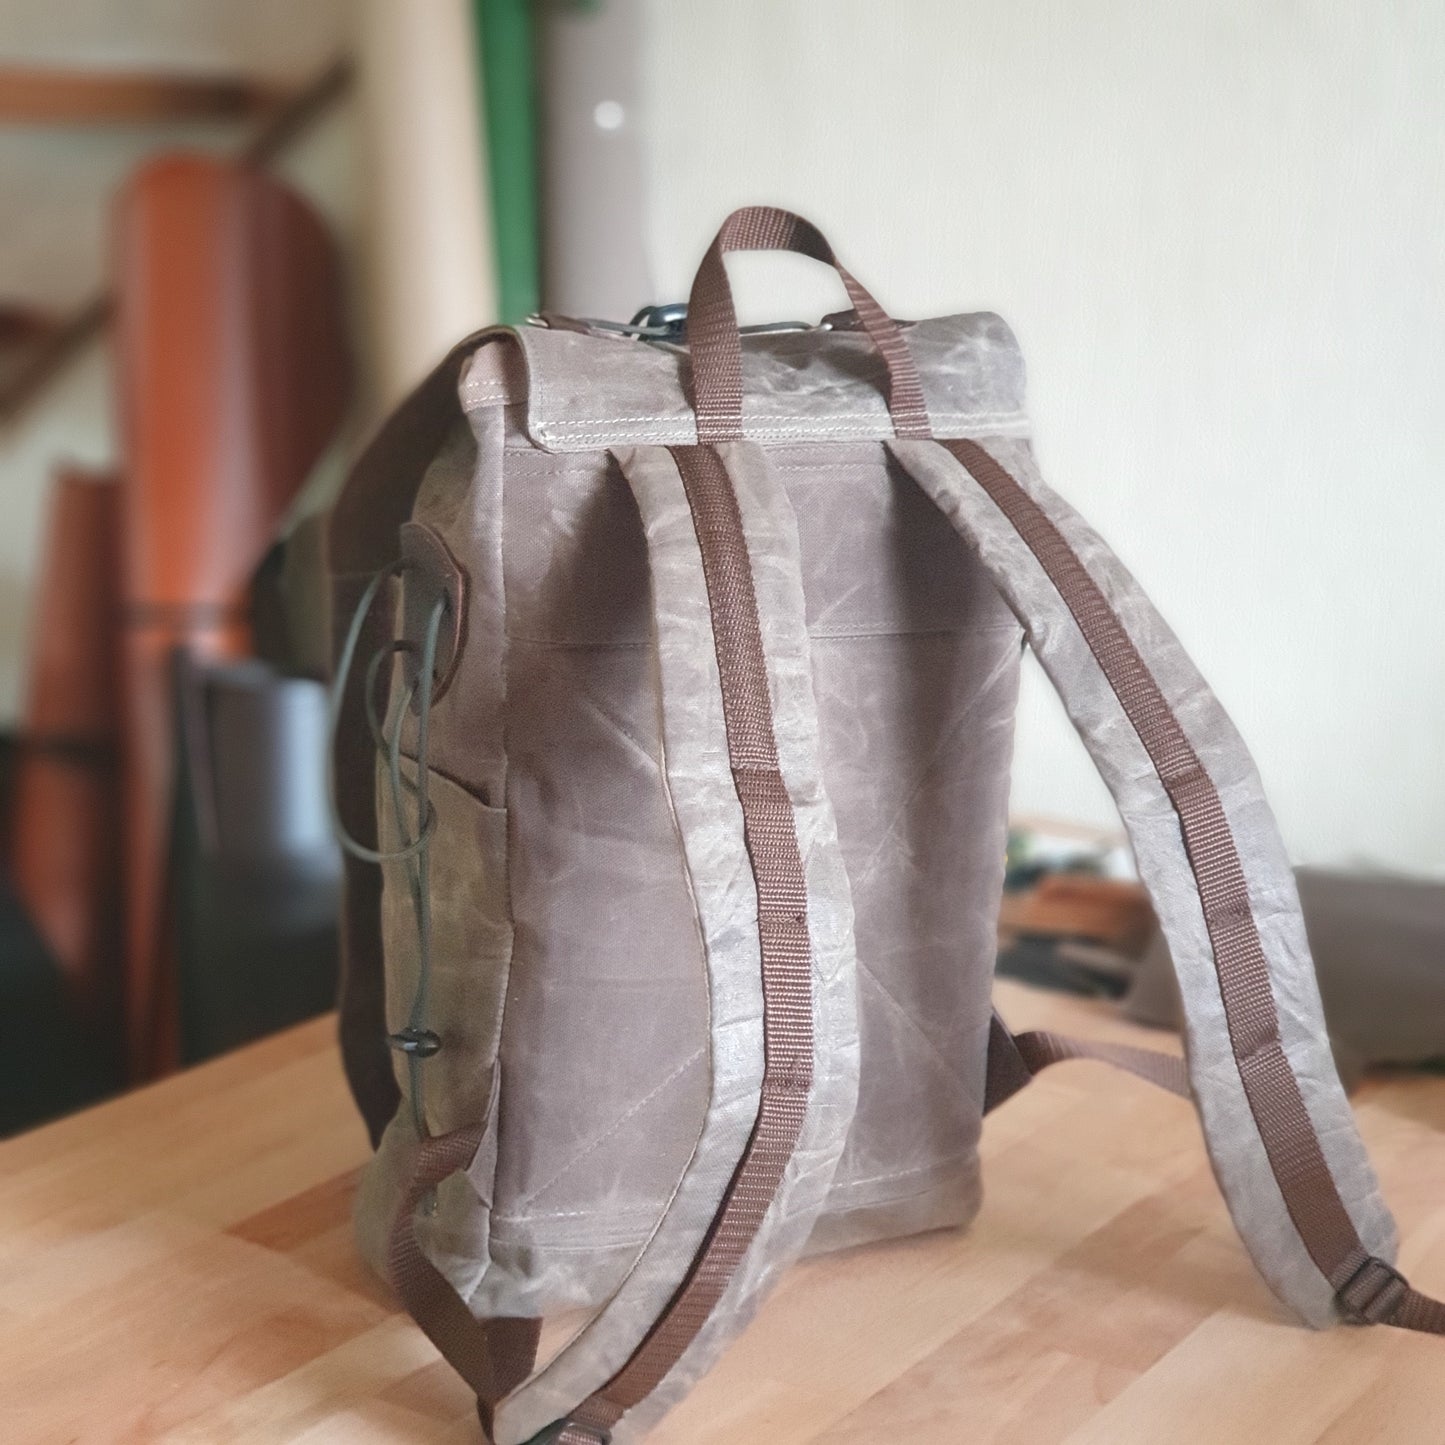 Wax Canvas backpack